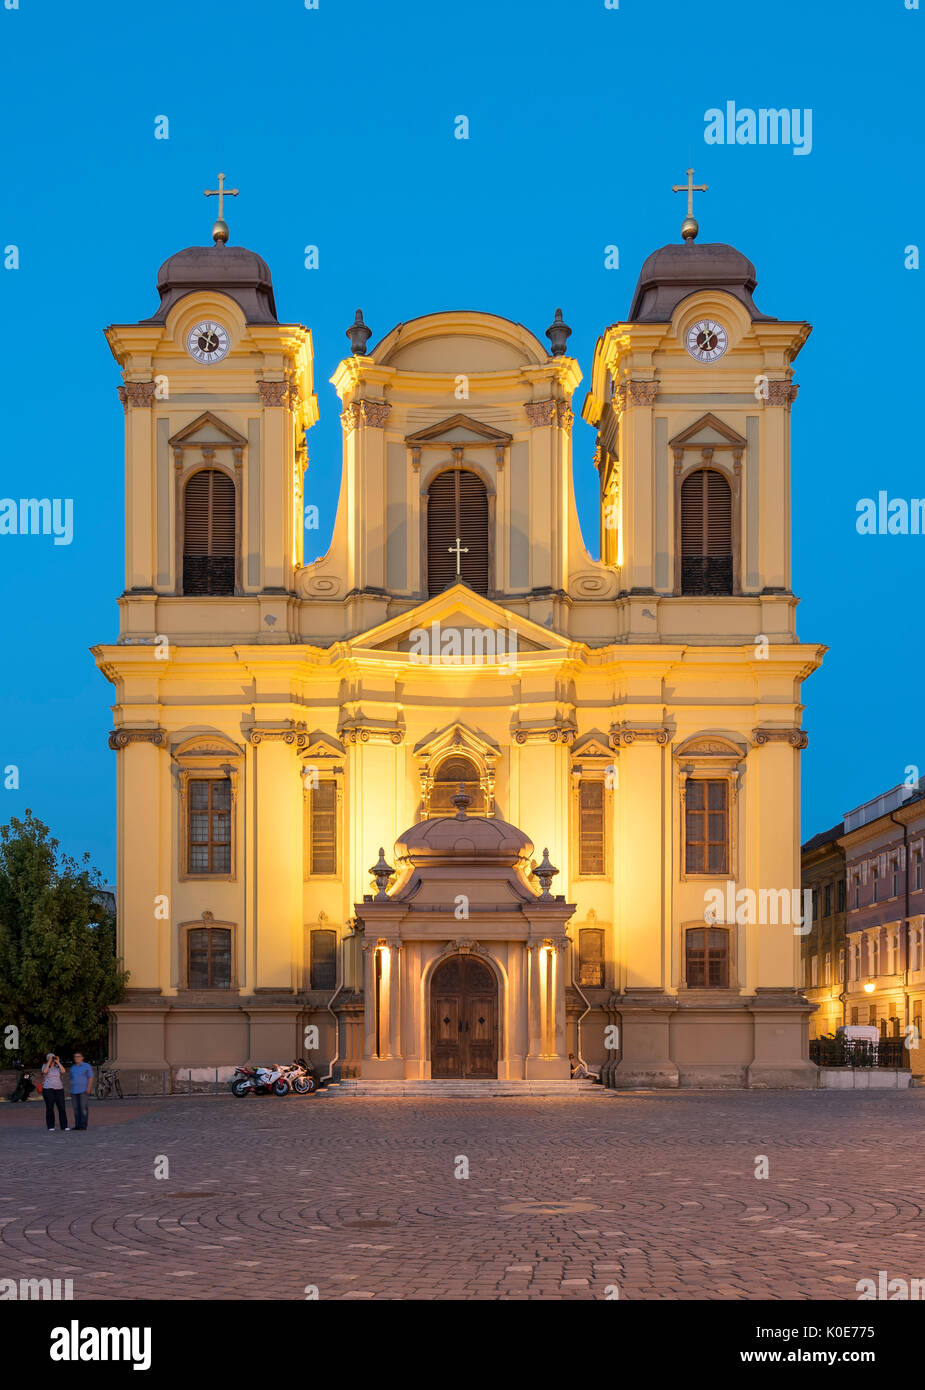 St. George's Cathedral (The Dome), Union Square, Timisoara, Romania Stock Photo